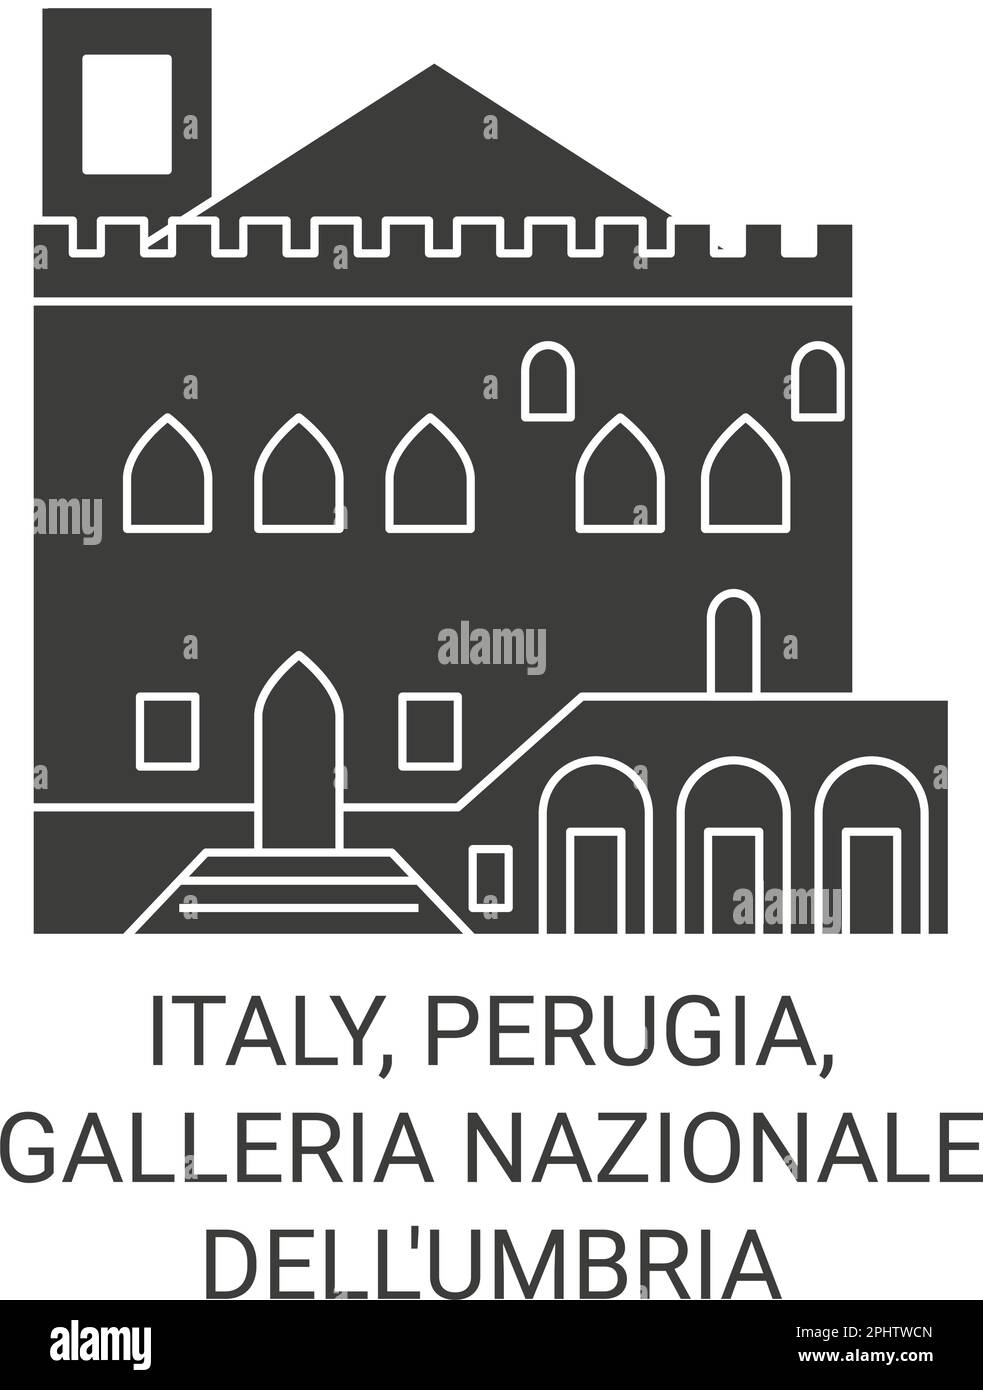 Italy, Perugia, Galleria Nazionale Dell'umbria travel landmark vector illustration Stock Vector